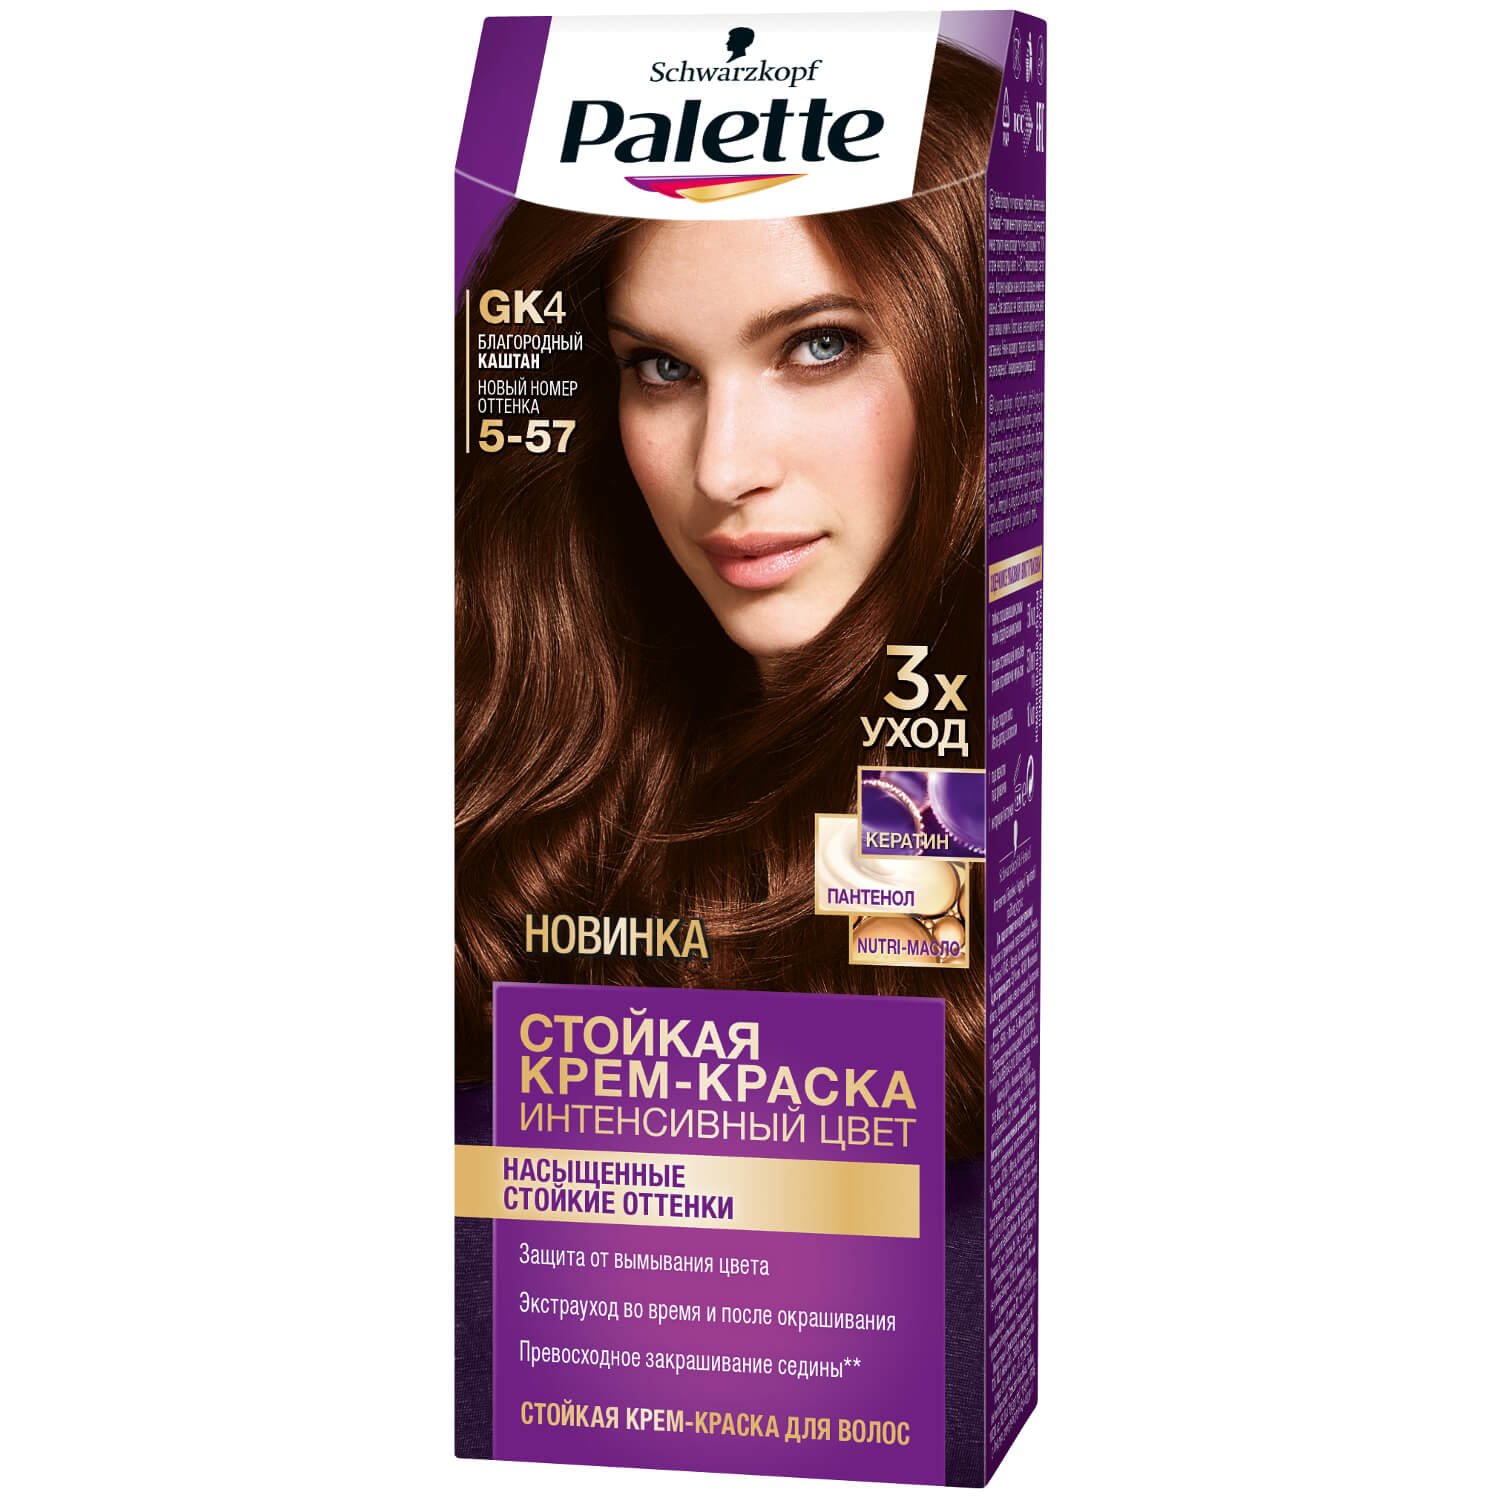 Palette ICC Краска для волос 5-57 (GK4) Благородный Каштан 110 мл, шт (Артикул: 707187)